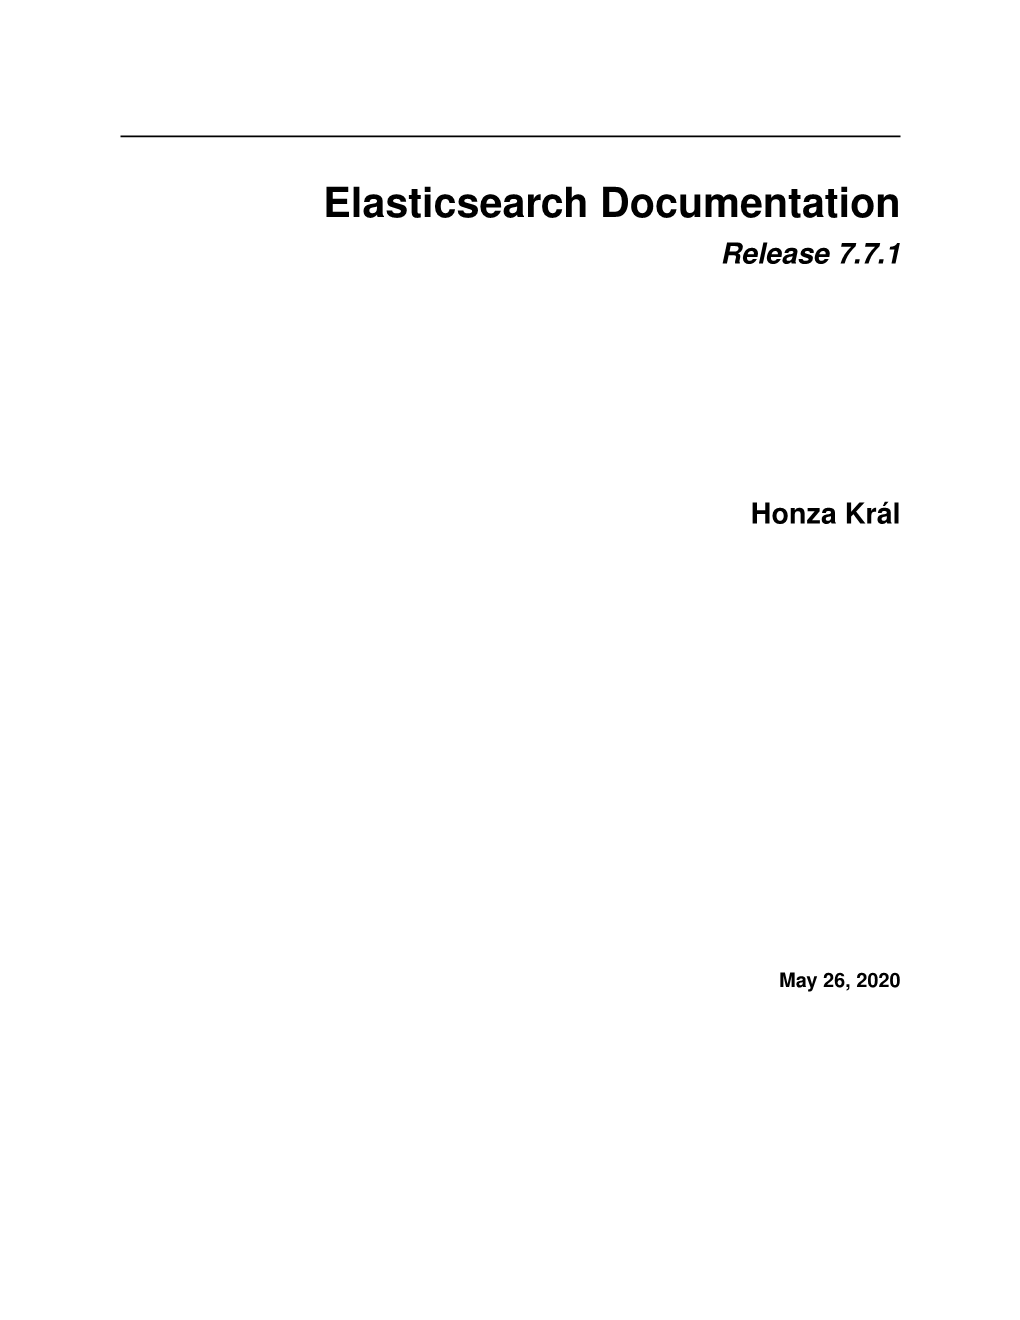 Elasticsearch Documentation Release 7.7.1